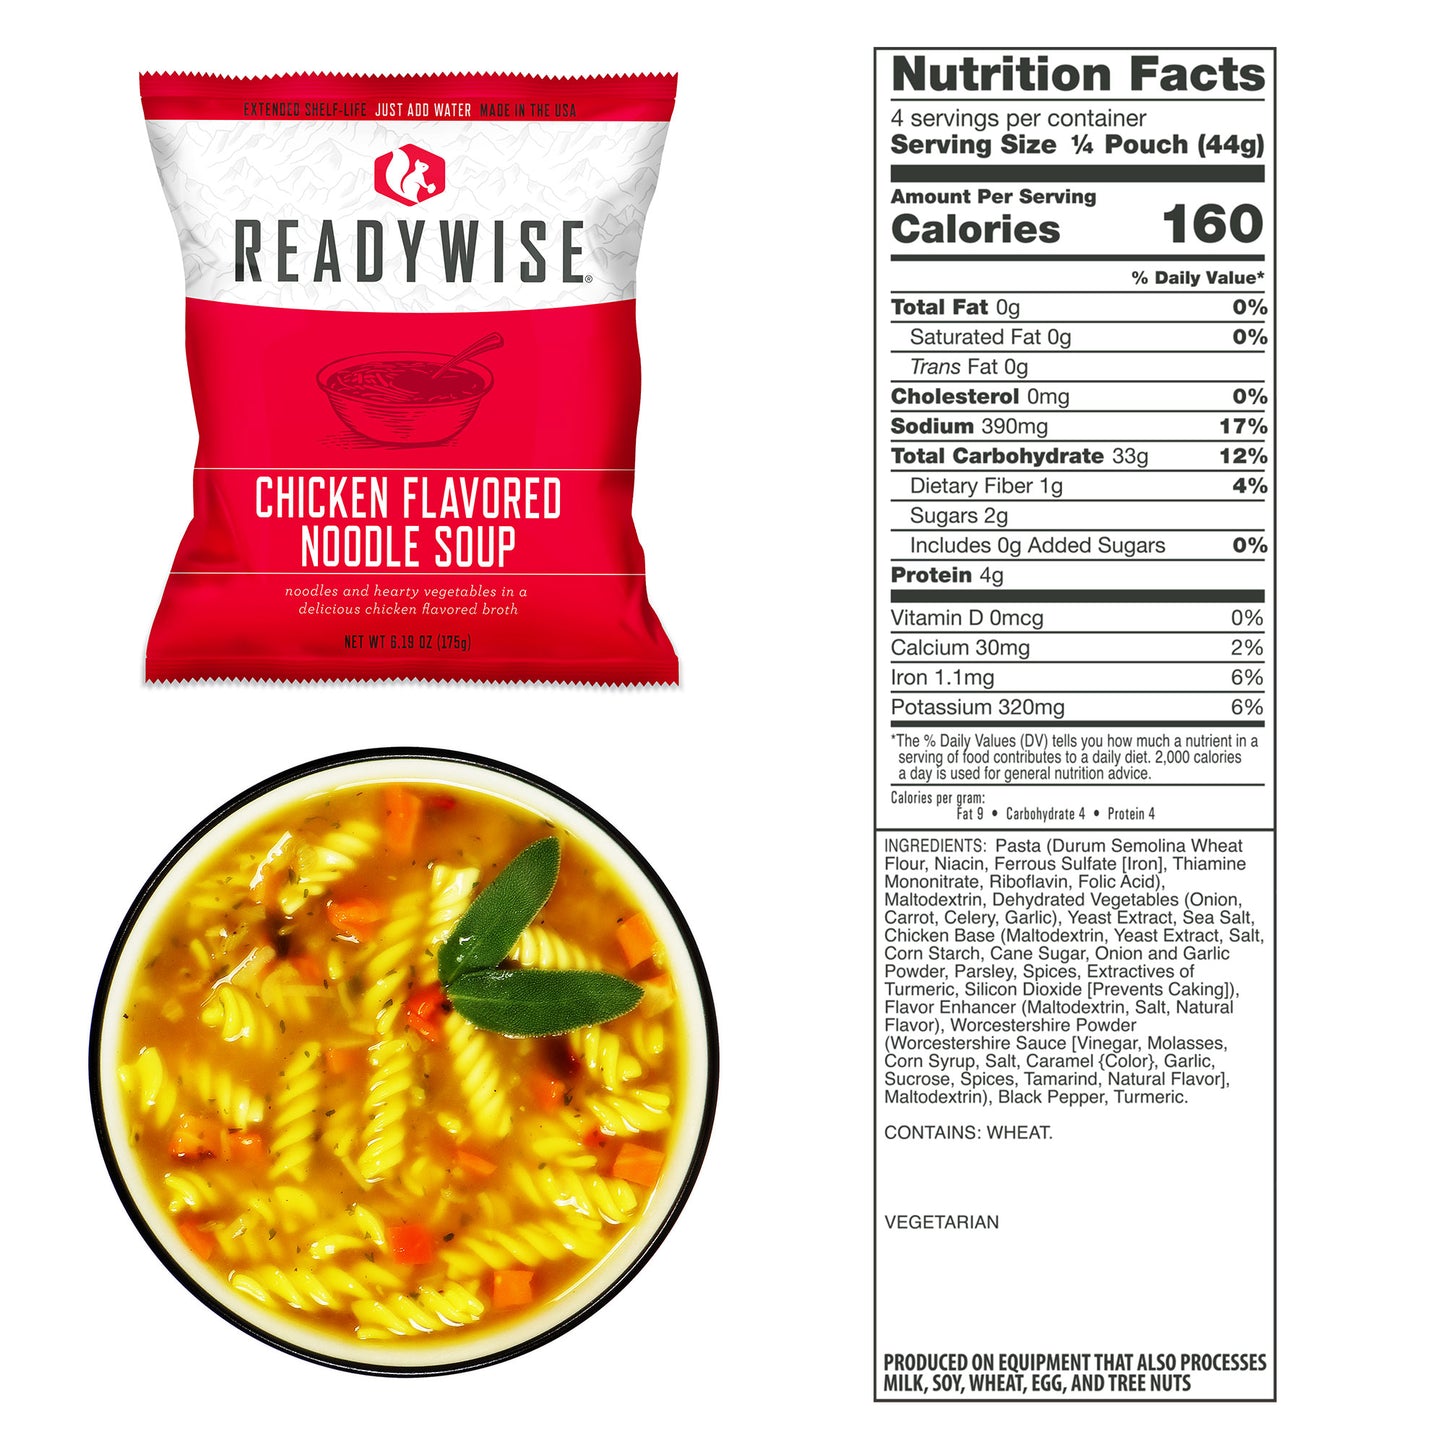 Freeze-Dried Emergency Food Supply Entree Variety Pack - 120 Servings